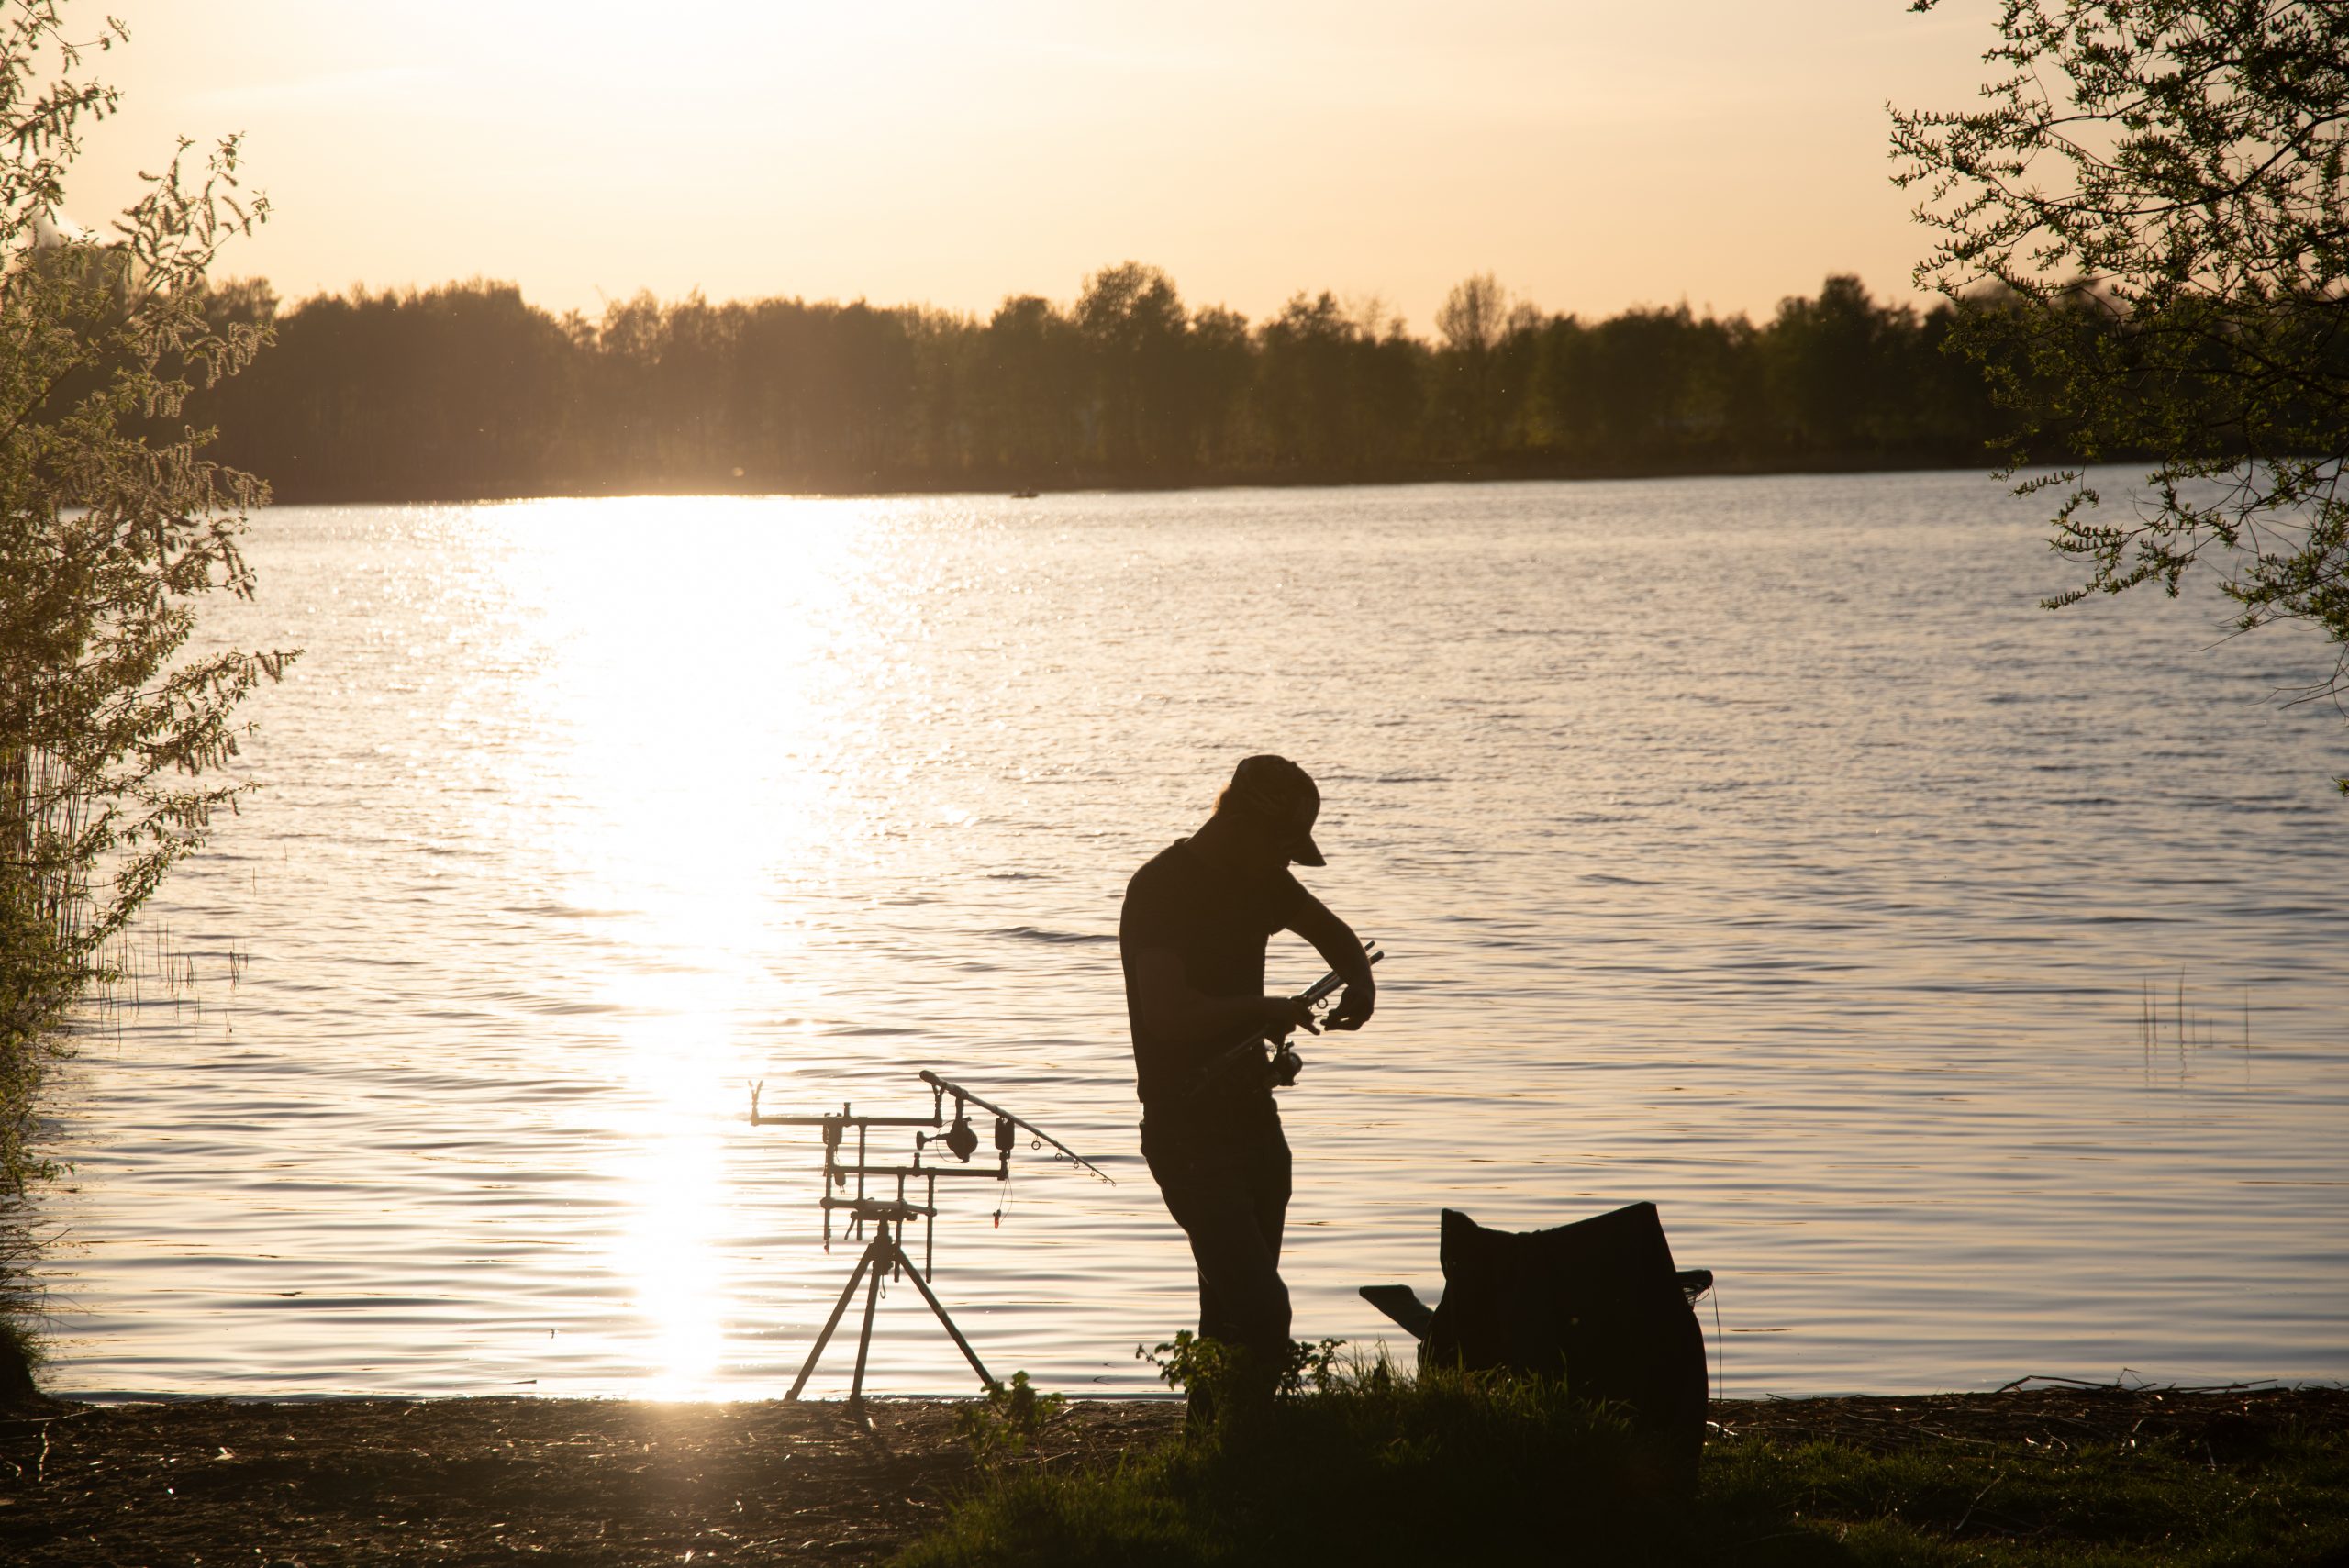 A fisherman silhouette fishing at sunset. Freshwater fishing, catch of fish